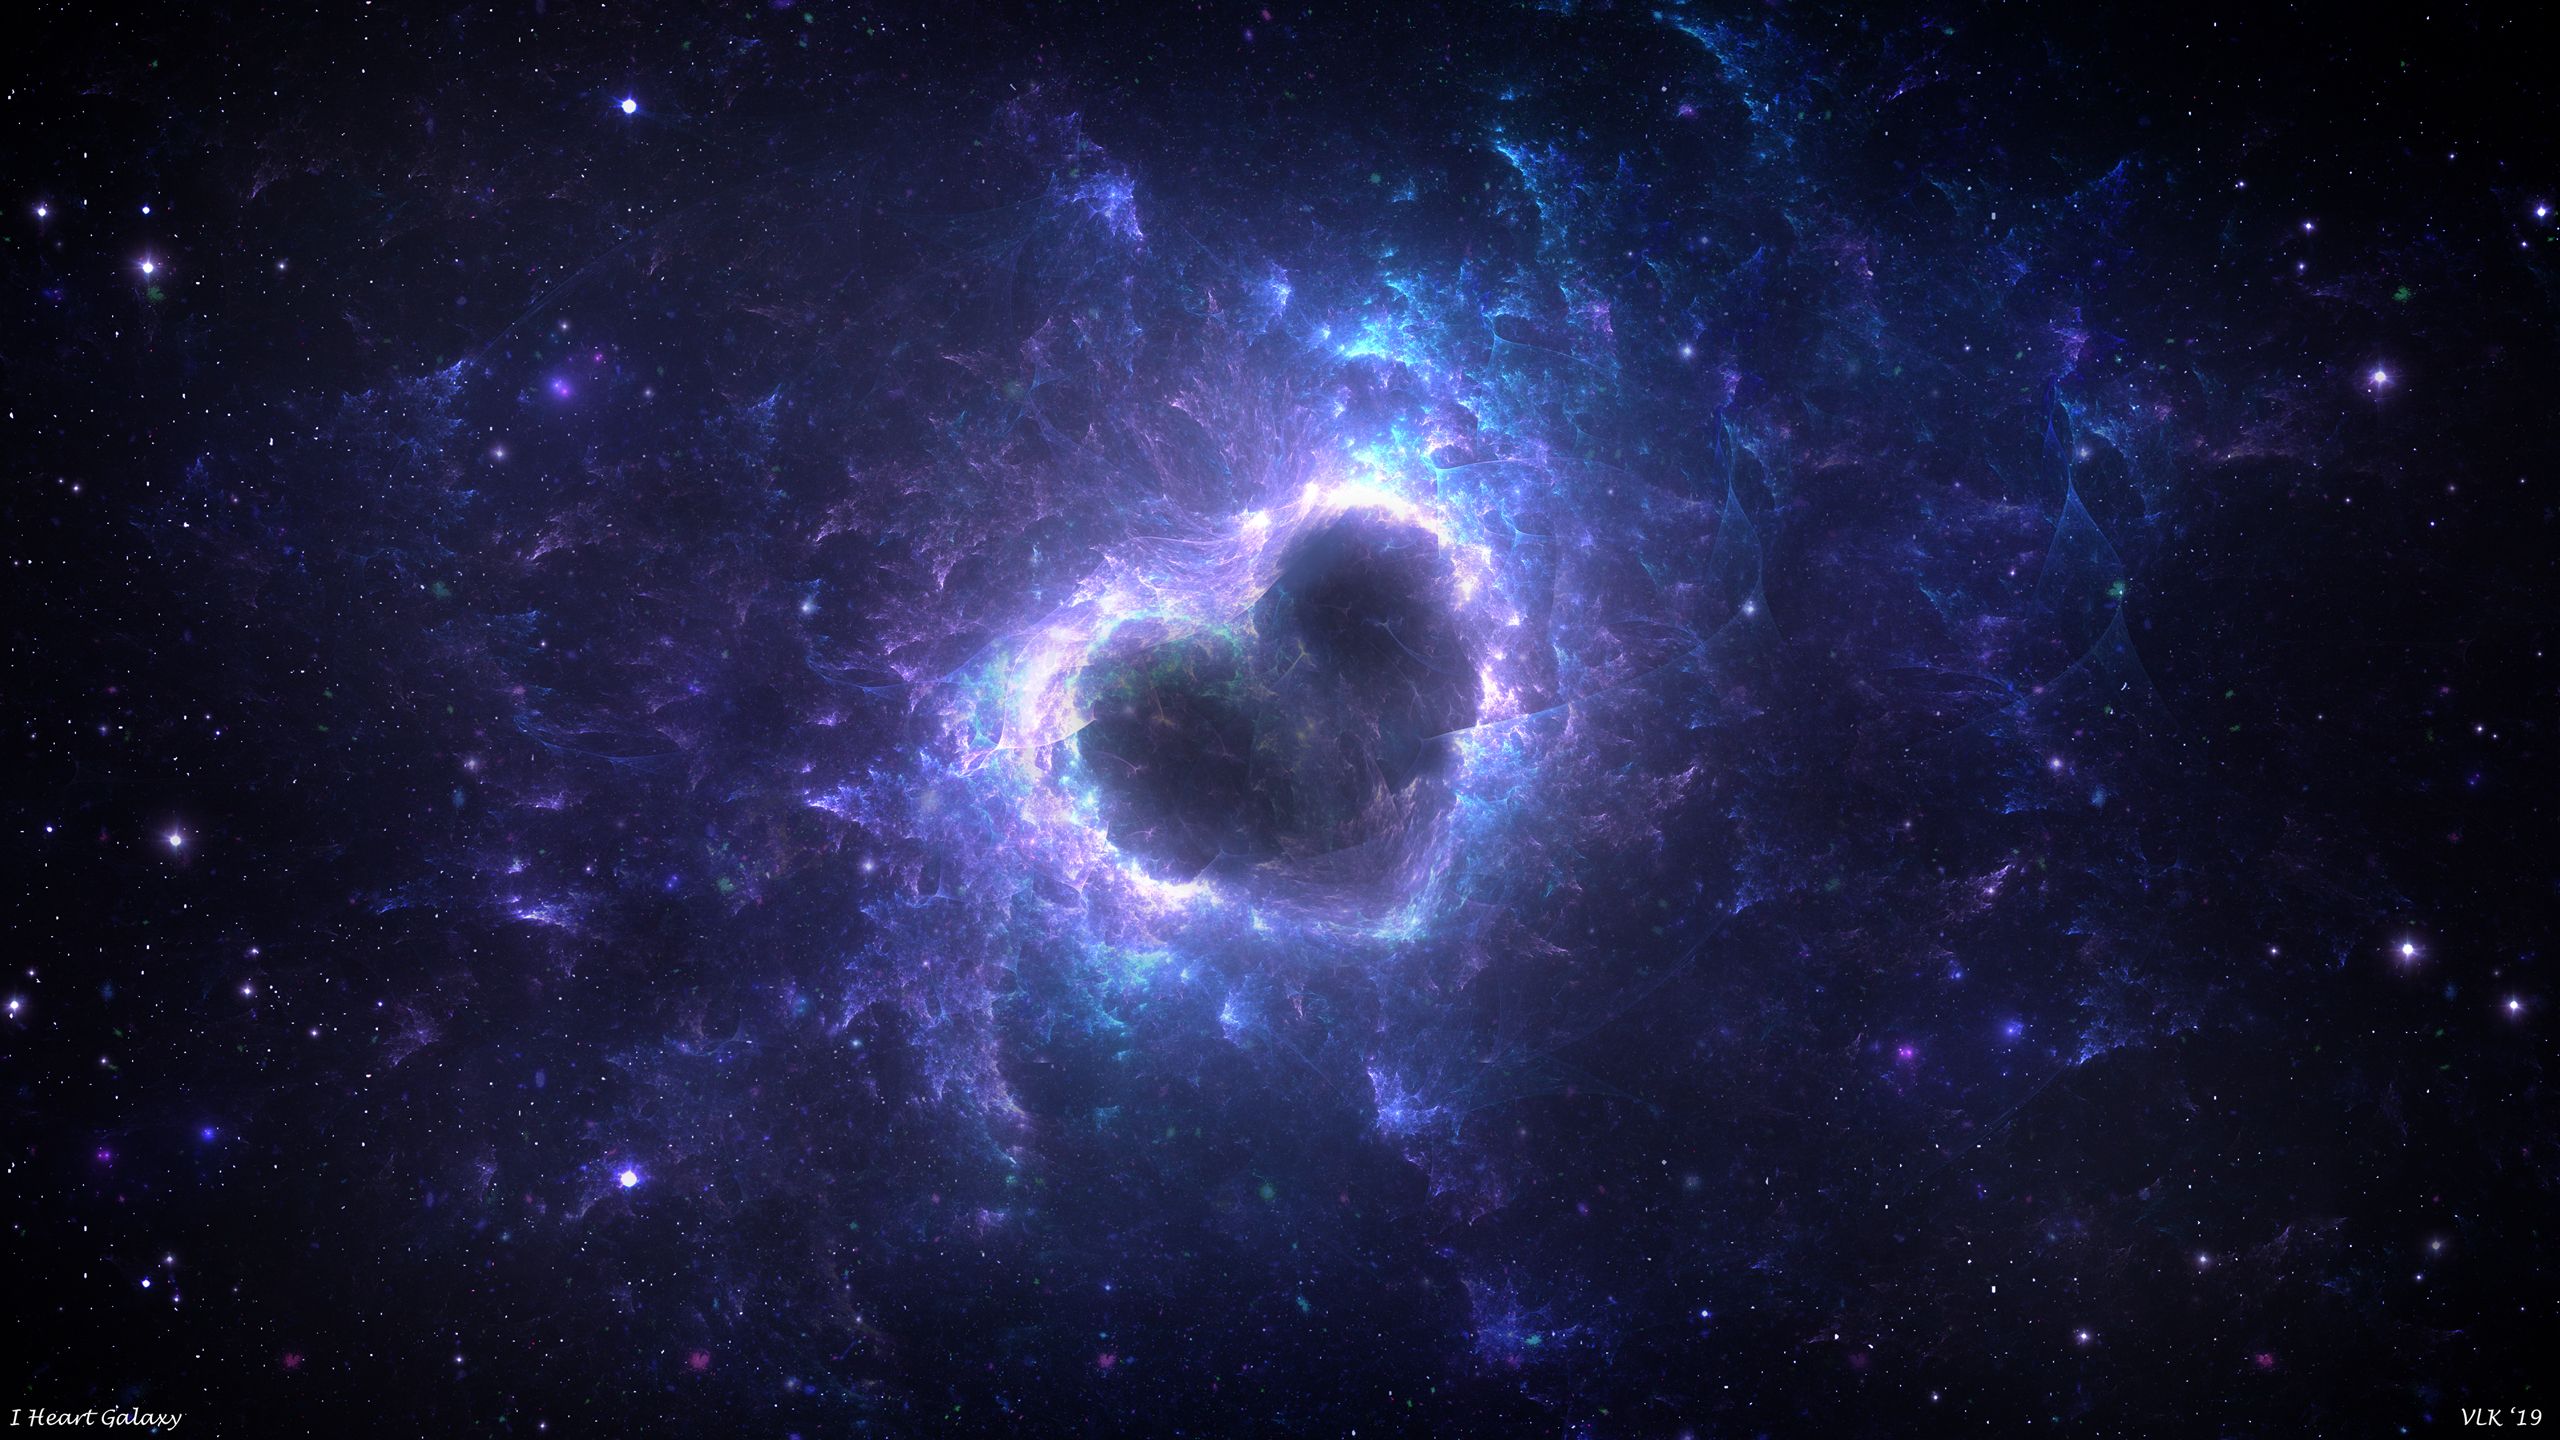 heart, #love, #space, #stars, #galaxy. Wallpaper No. 766570.cc. Heart wallpaper hd, Galaxy wallpaper, Galaxy image